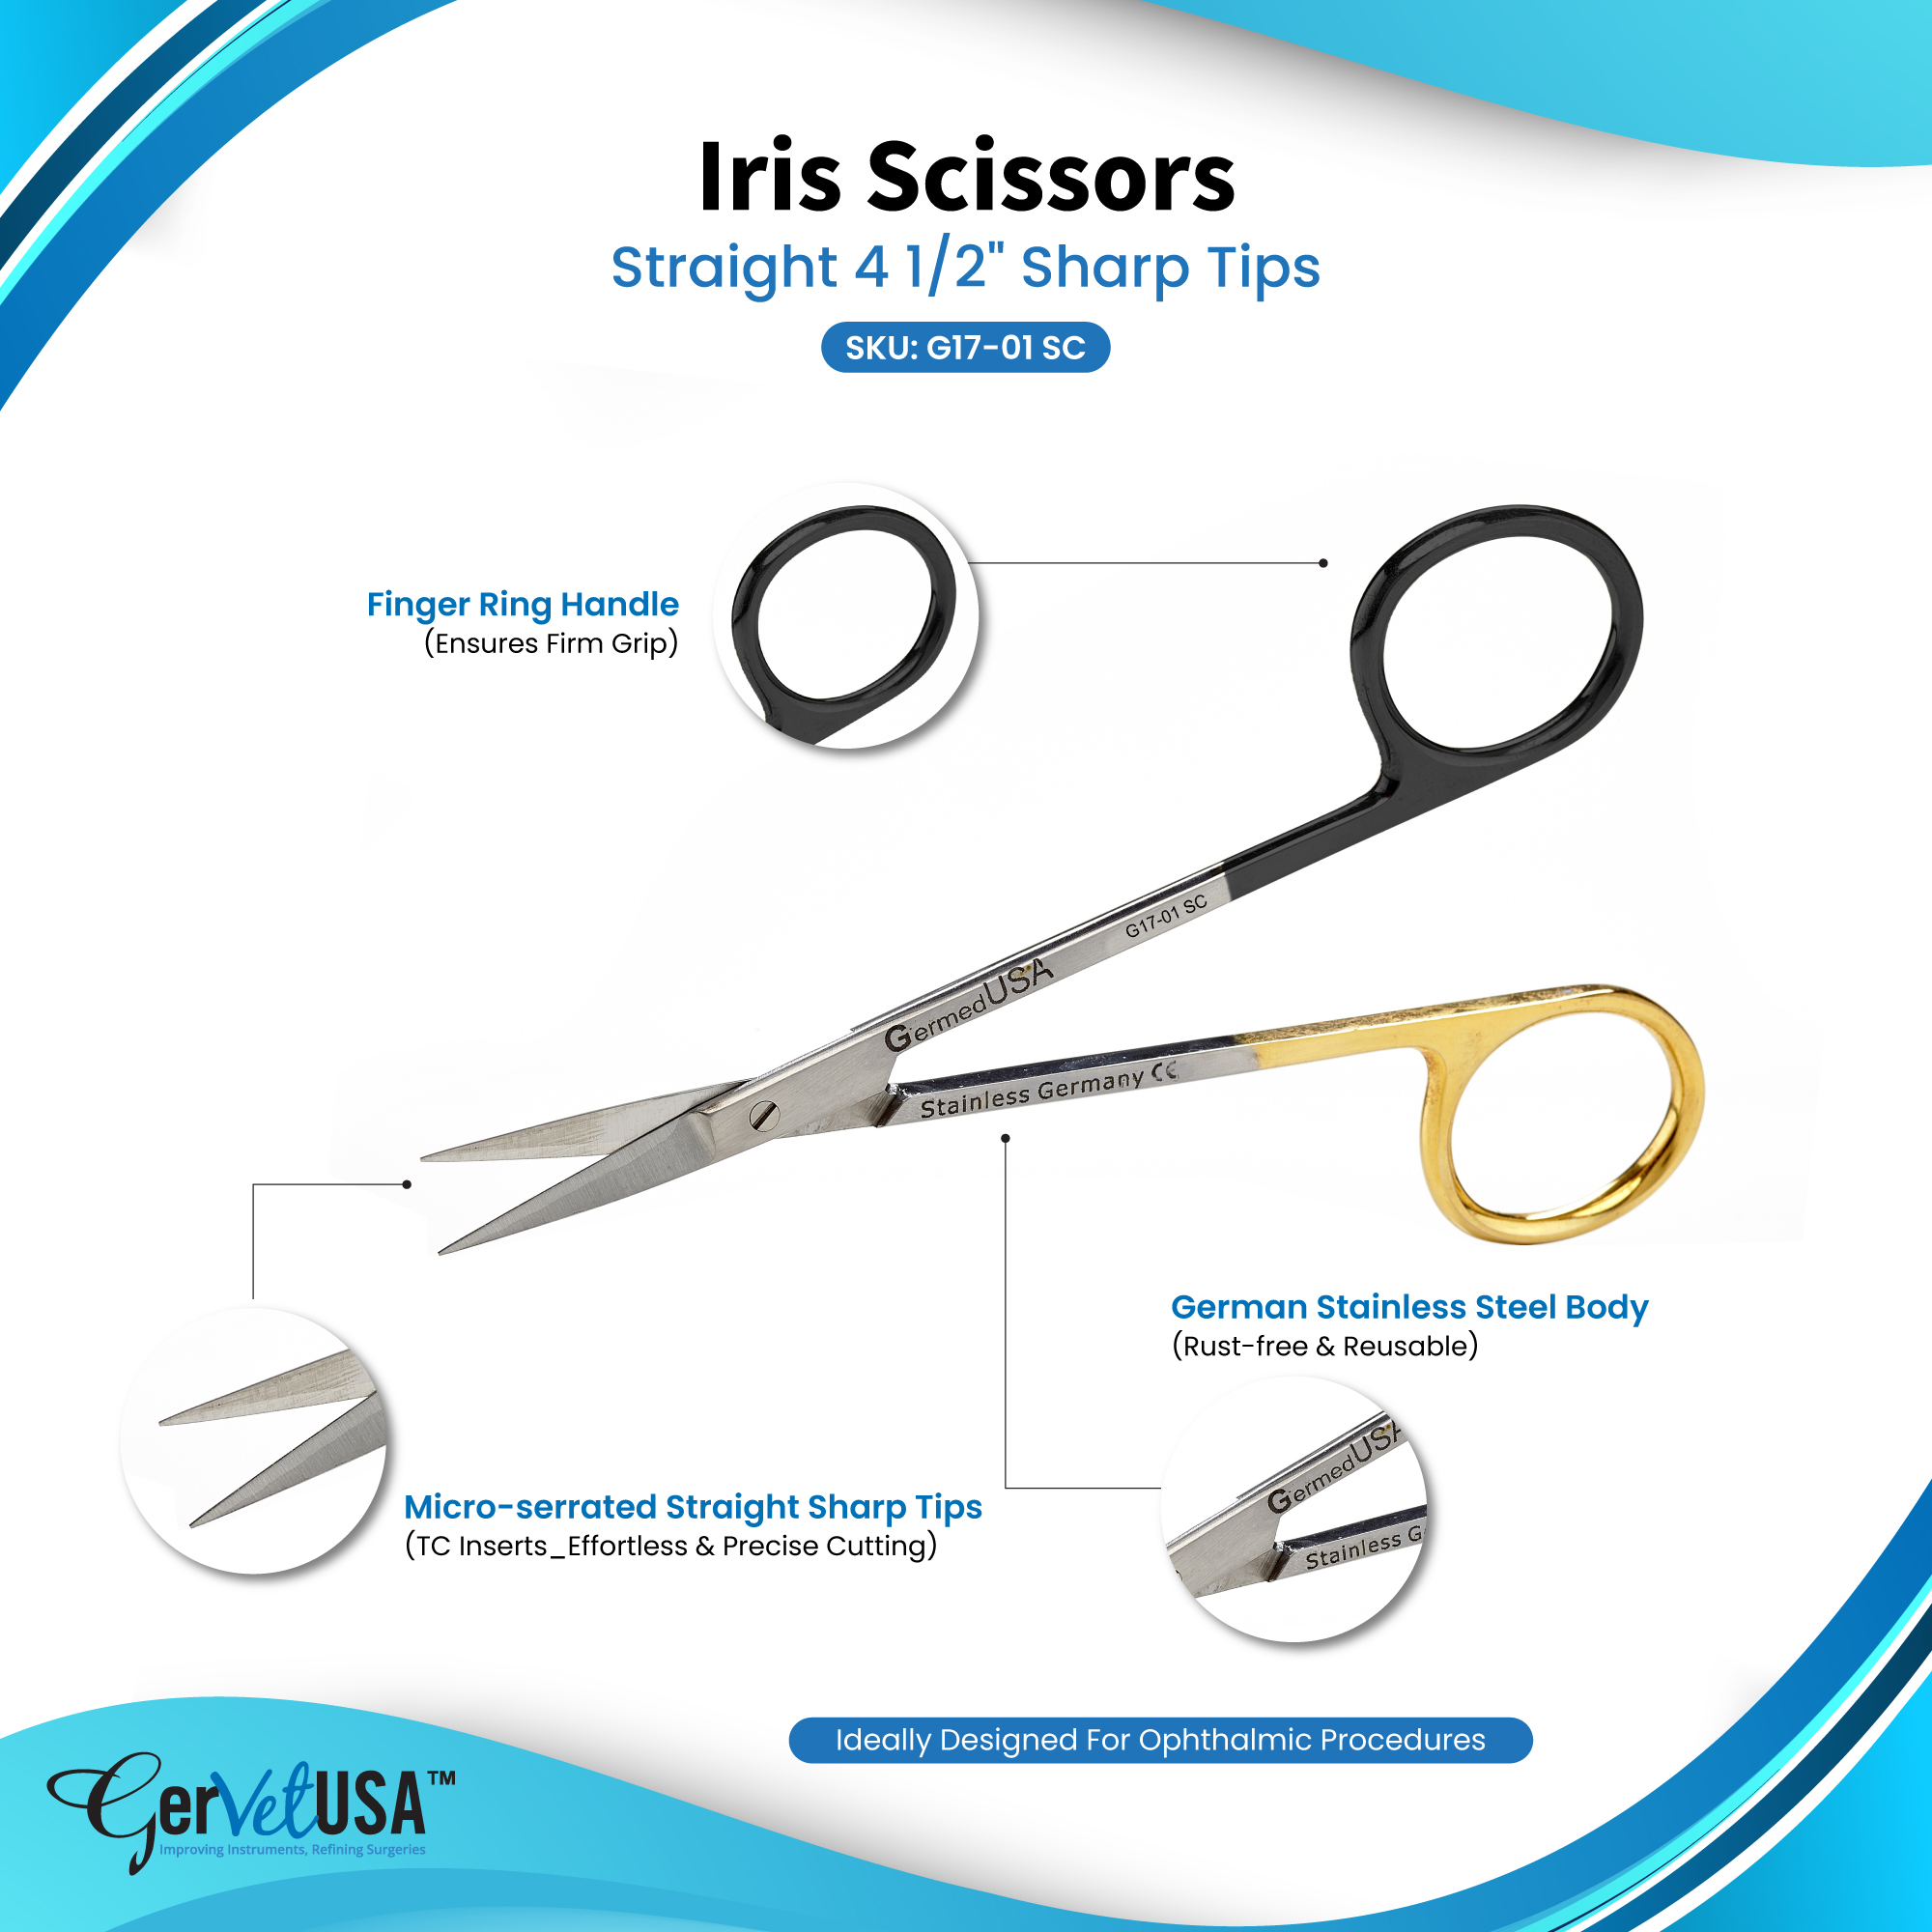 https://www.gervetusa.com/up_data/products/images/ssis-super-sharp-iris-scissors-tungsten-carbide-1654250776-.jpg